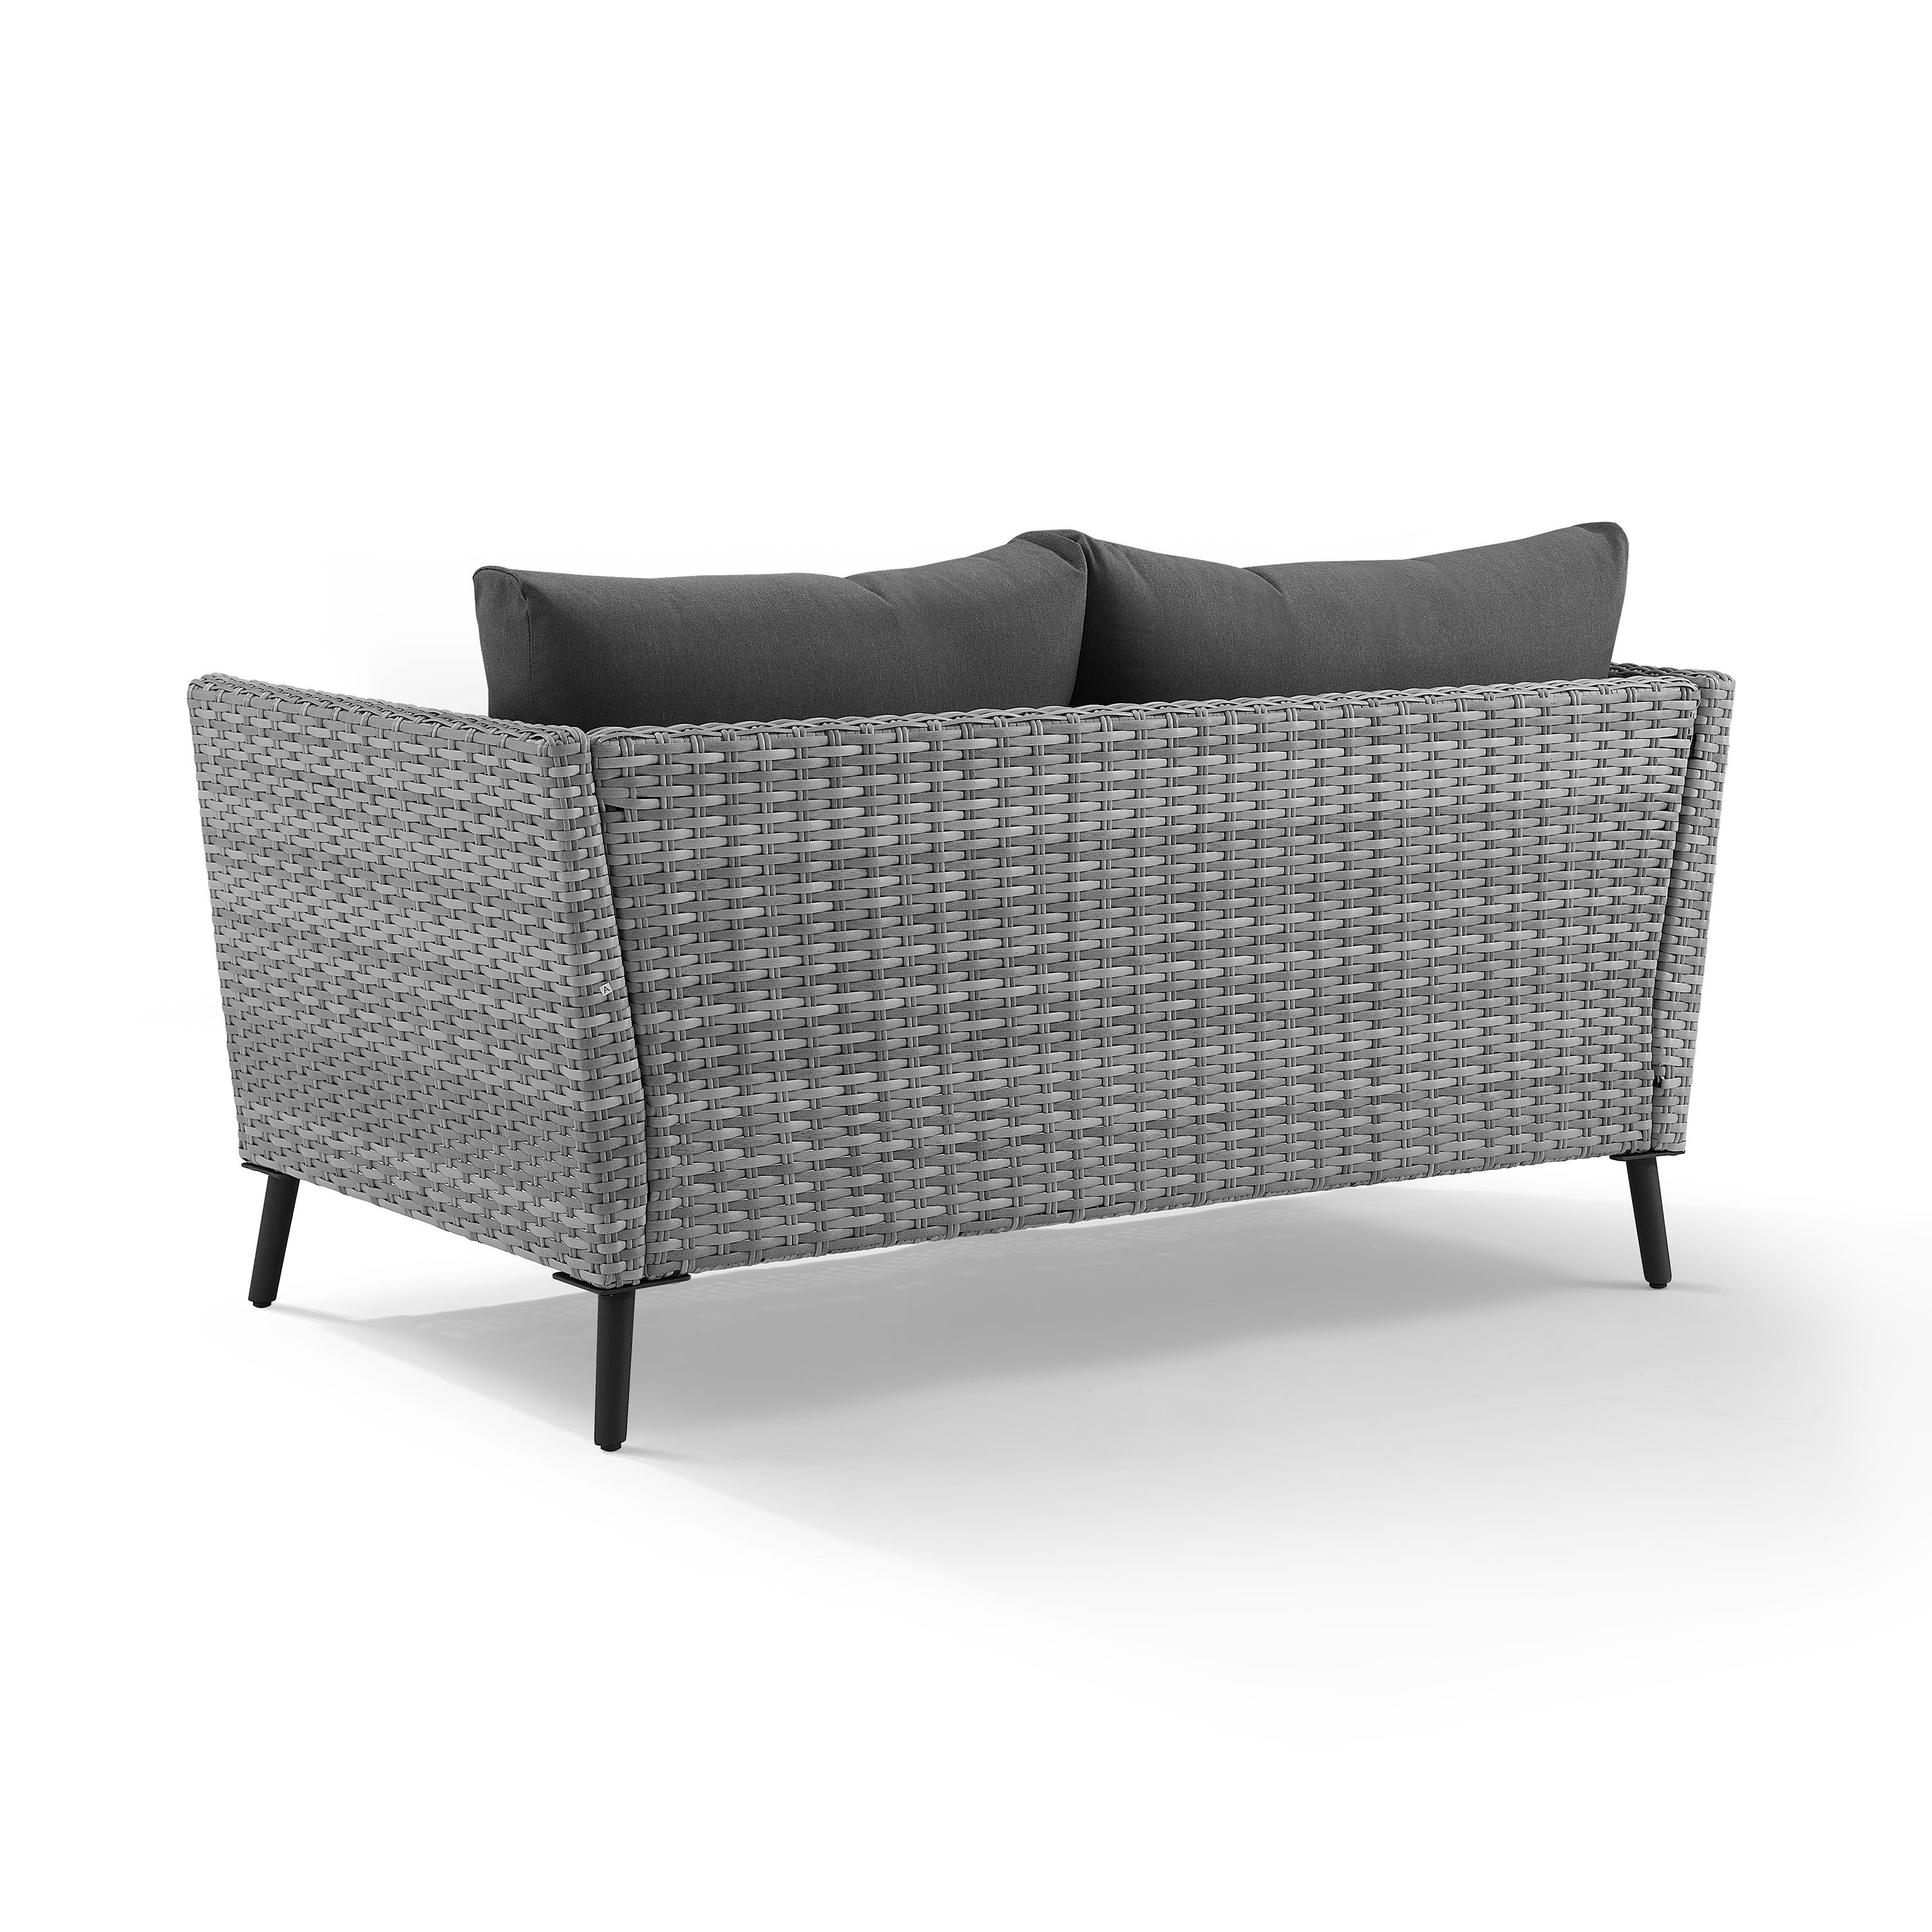 Crosley Richland 2 Piece Wicker Patio Sofa Set in Gray - image 5 of 10